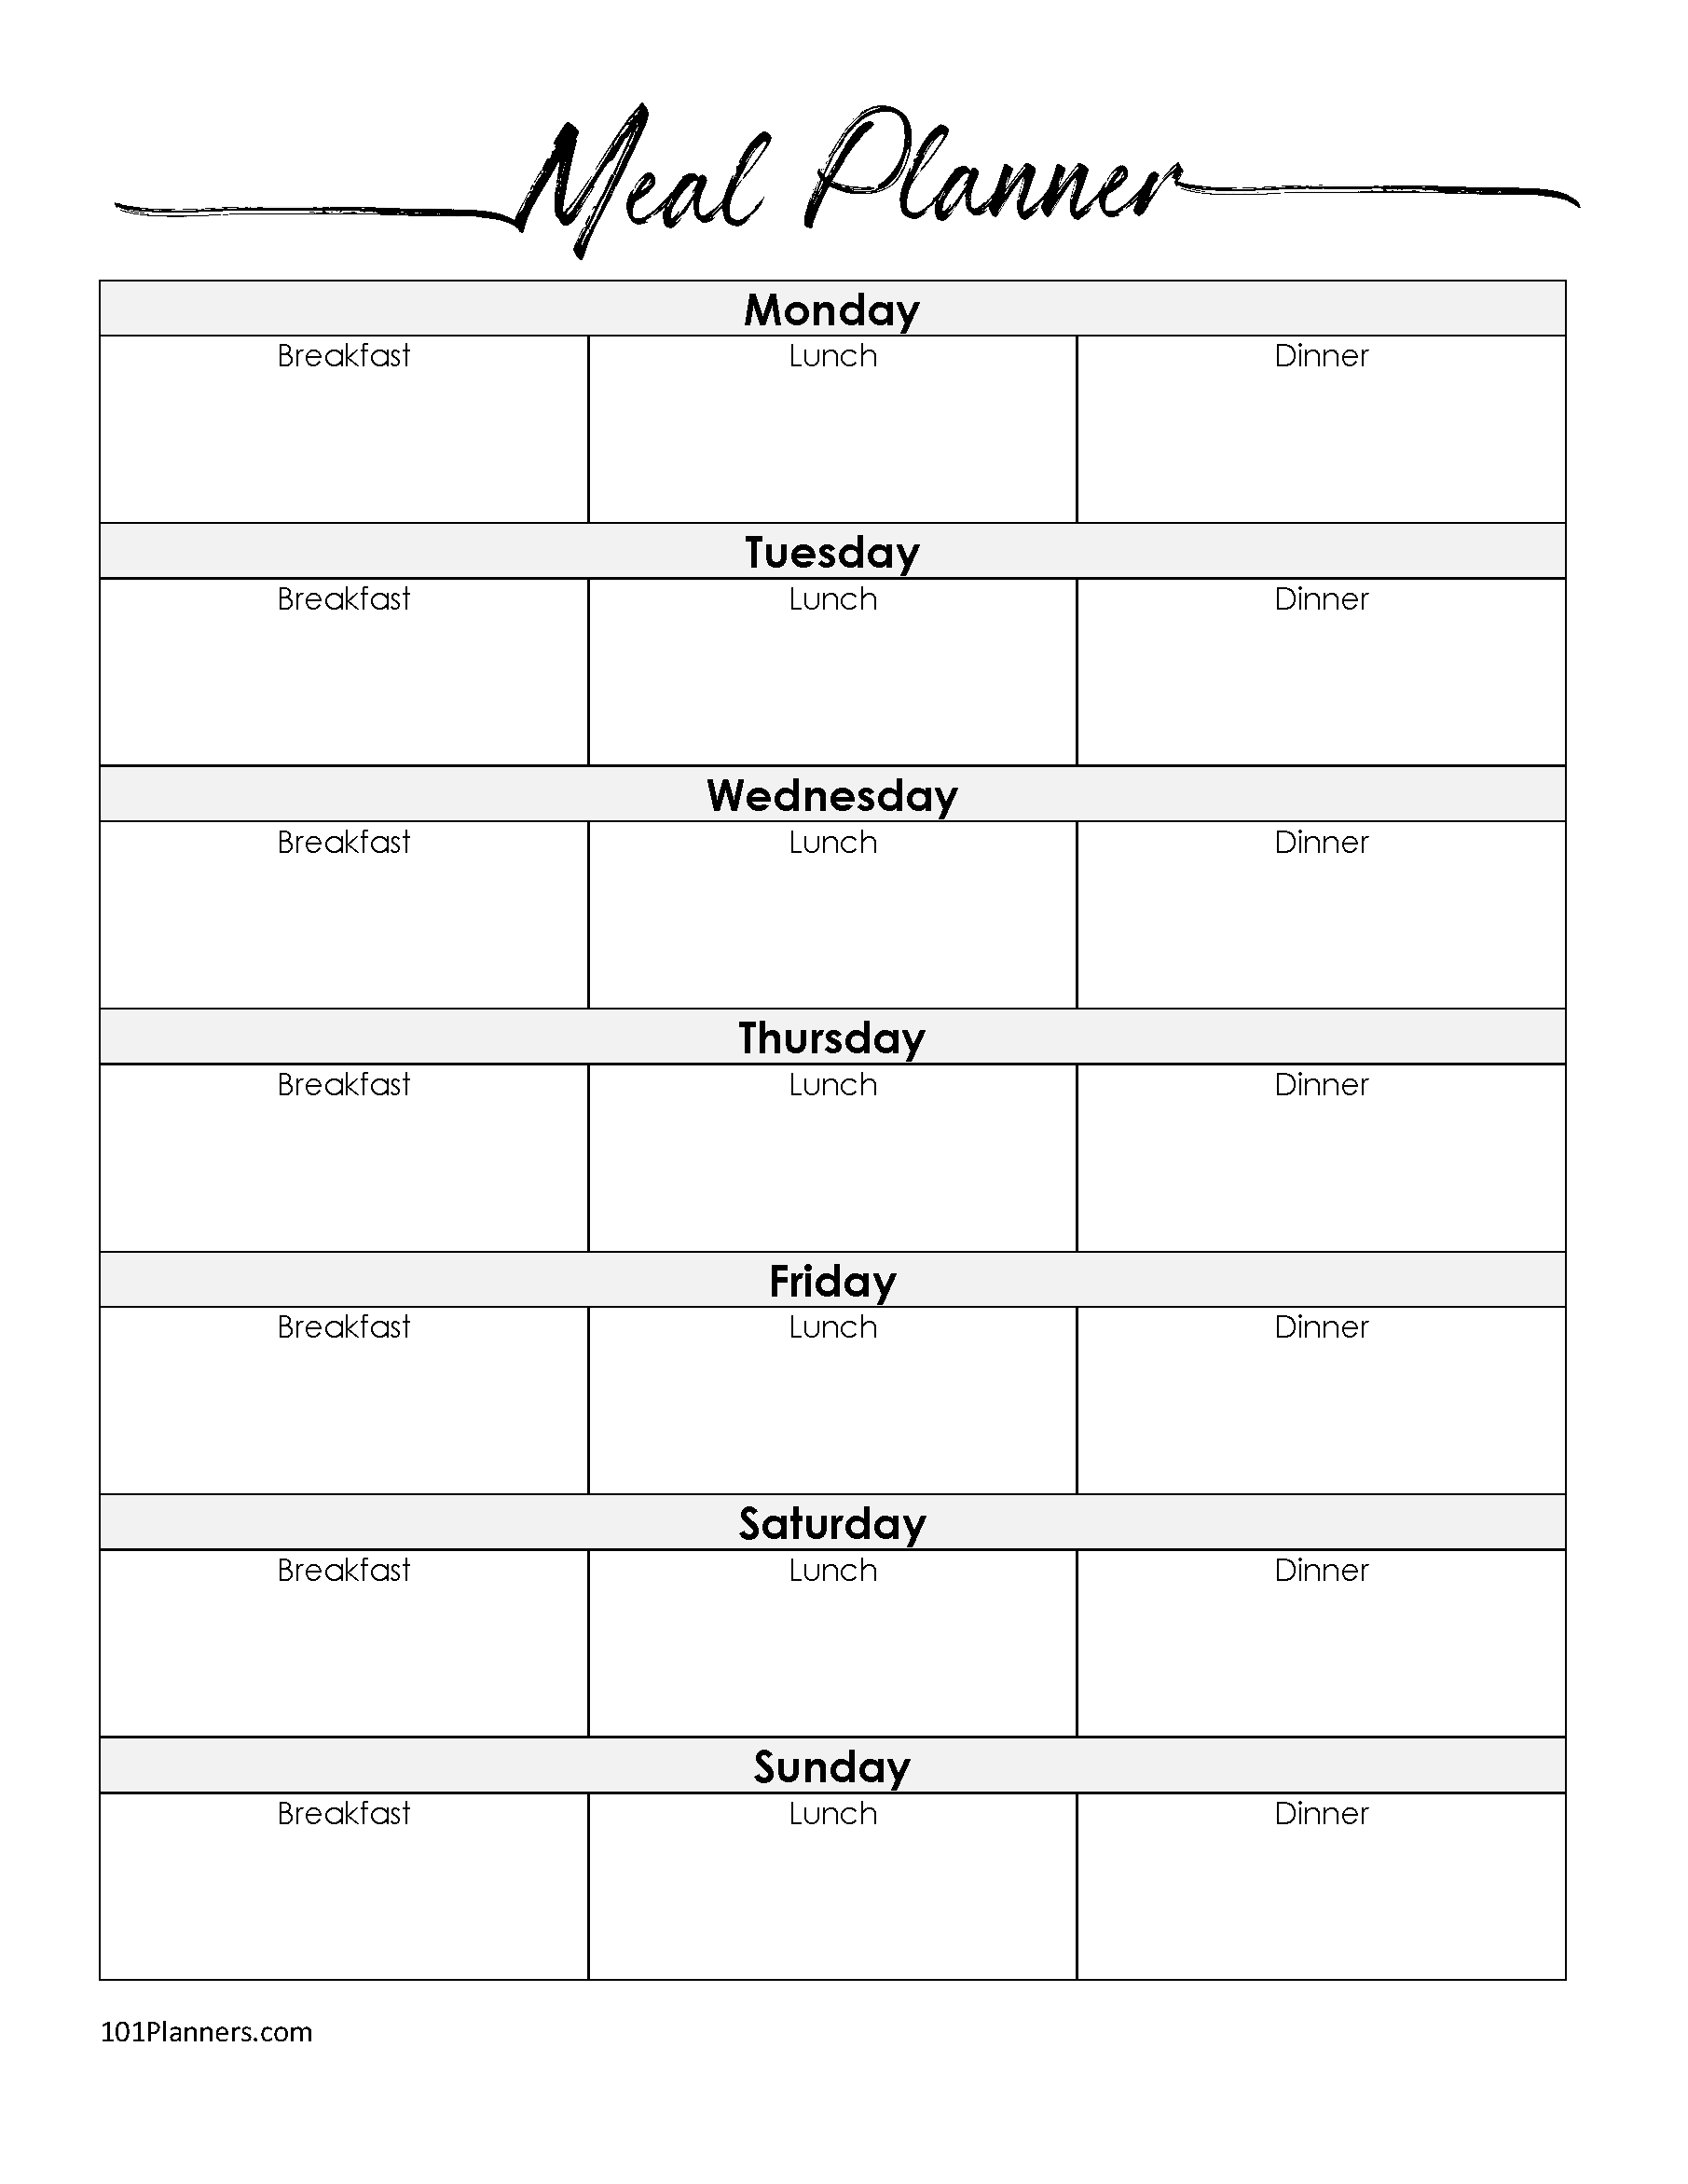 paper-calendars-planners-editable-planner-template-editable-planner-grocery-planner-meal